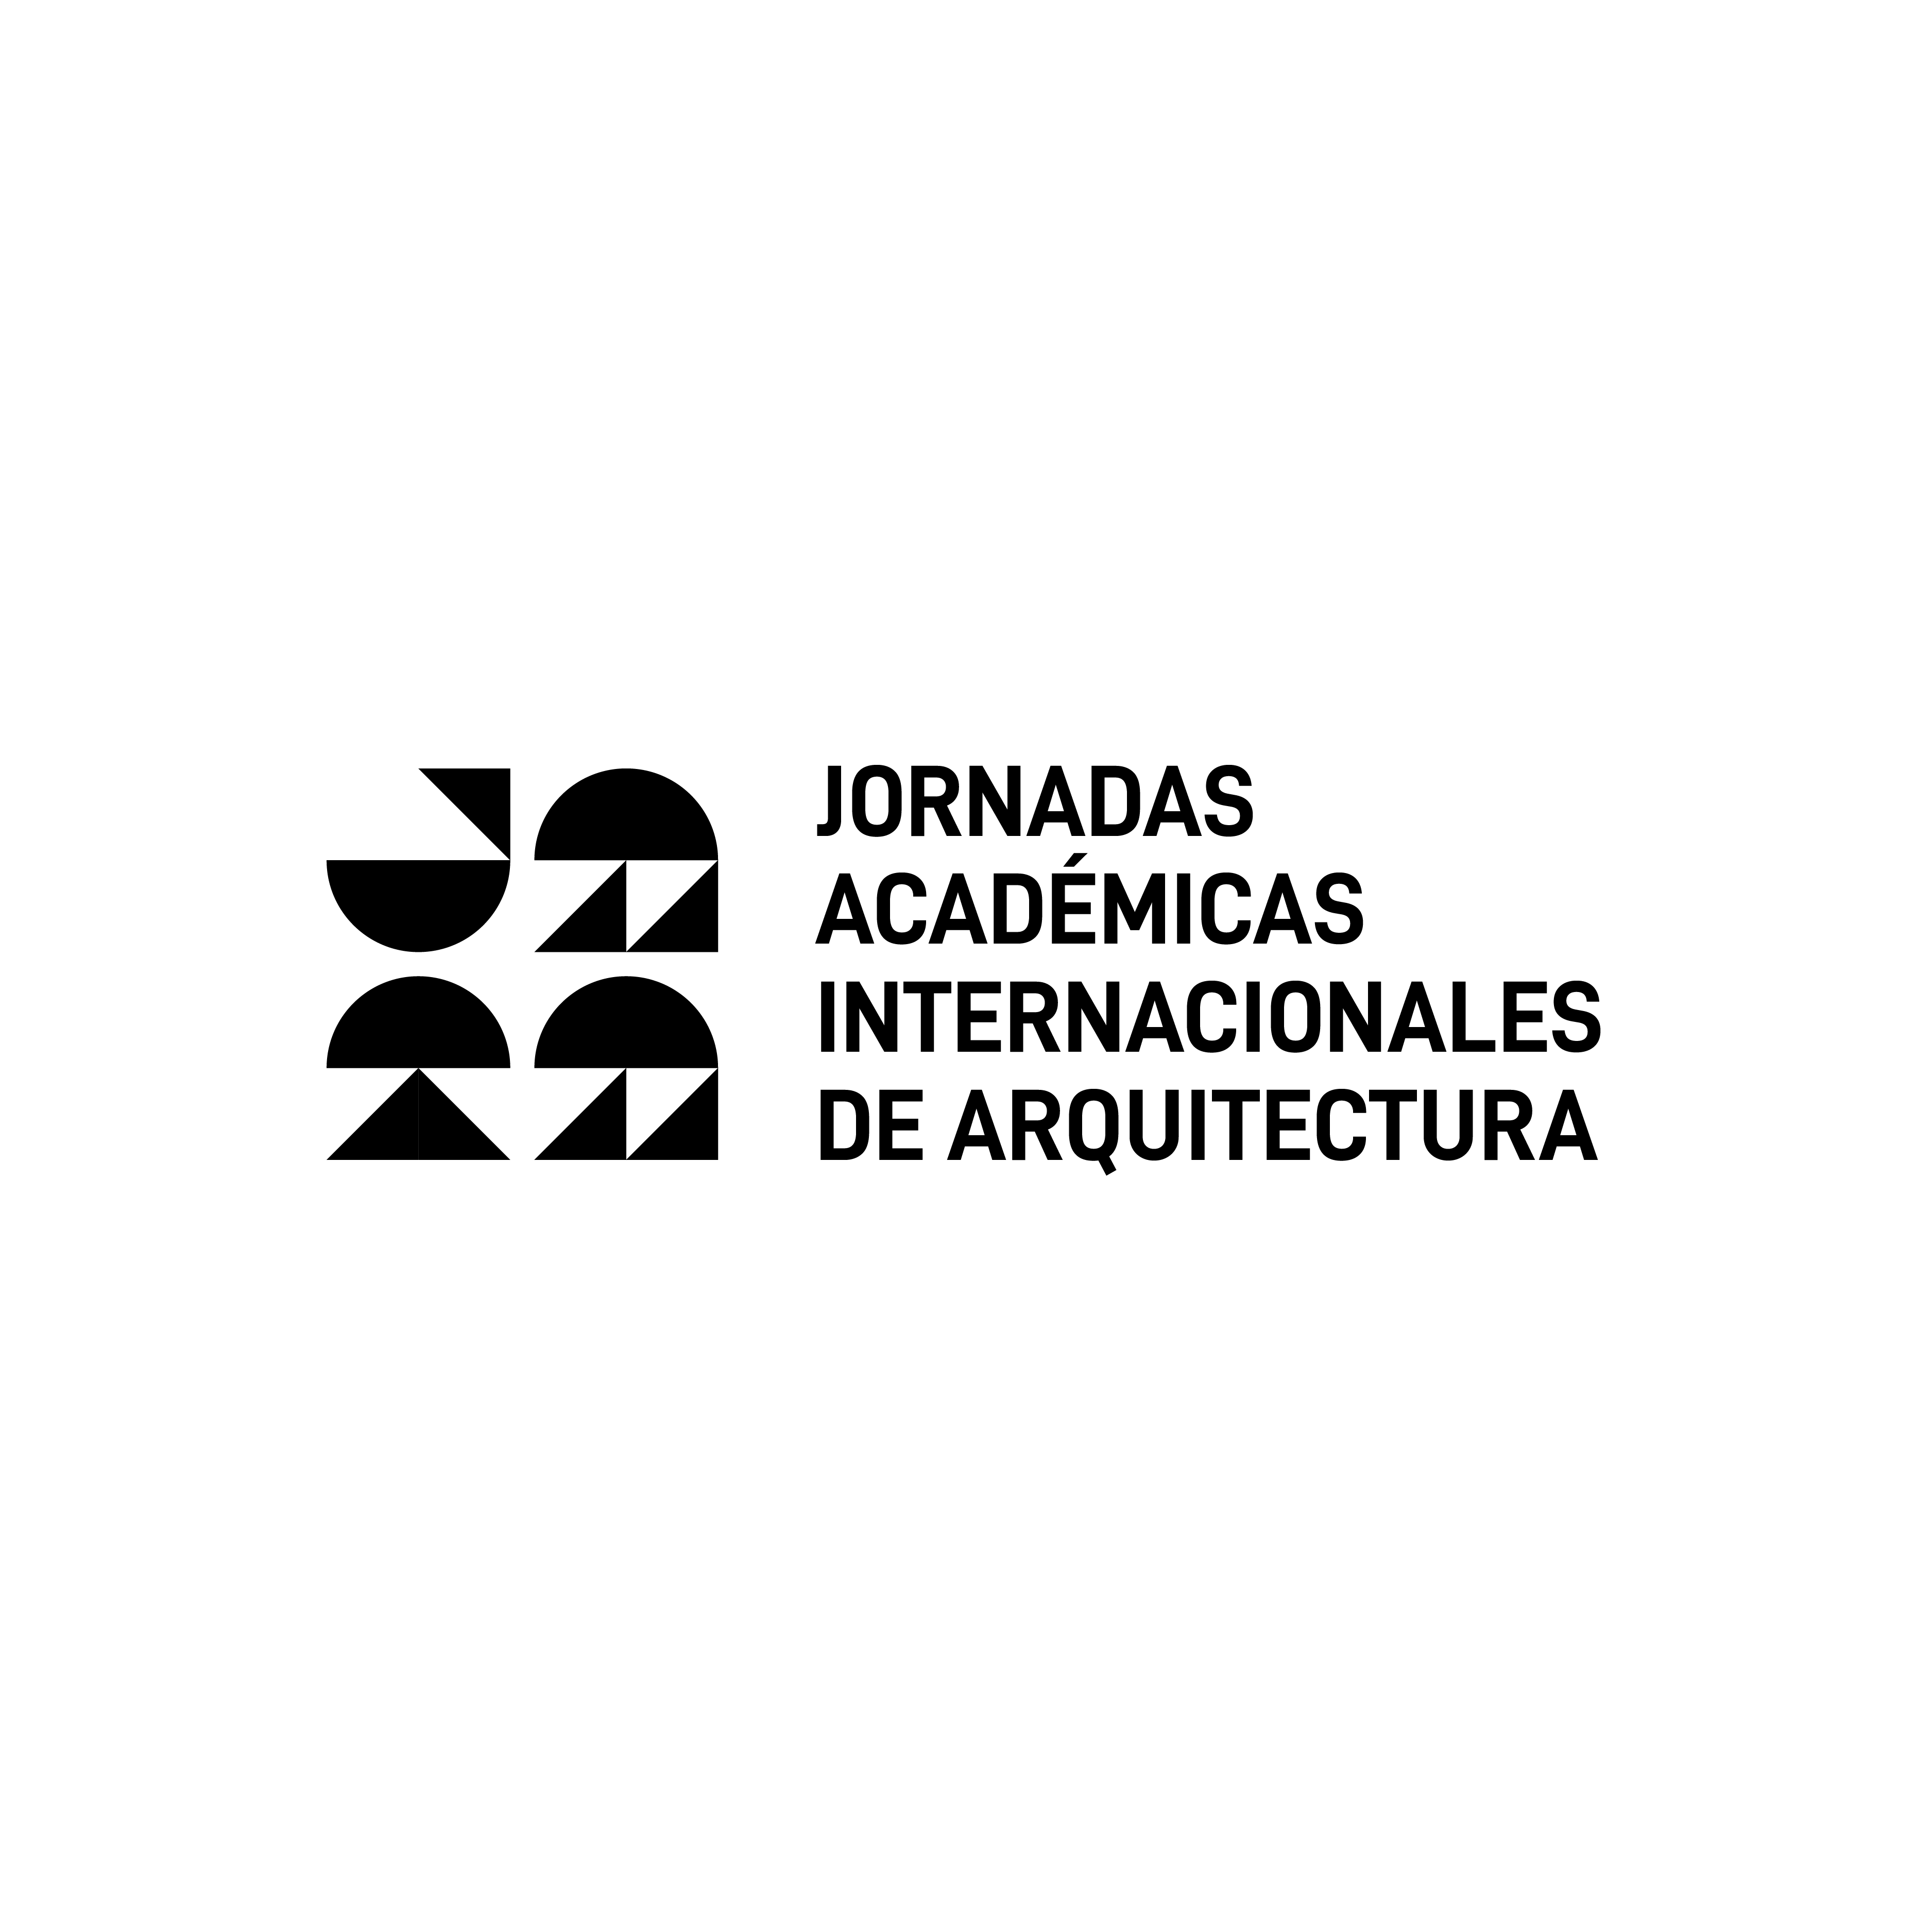 Jornadas Academicas Internacionales de Arquitectura  logo design by logo designer Anthony Alava for your inspiration and for the worlds largest logo competition